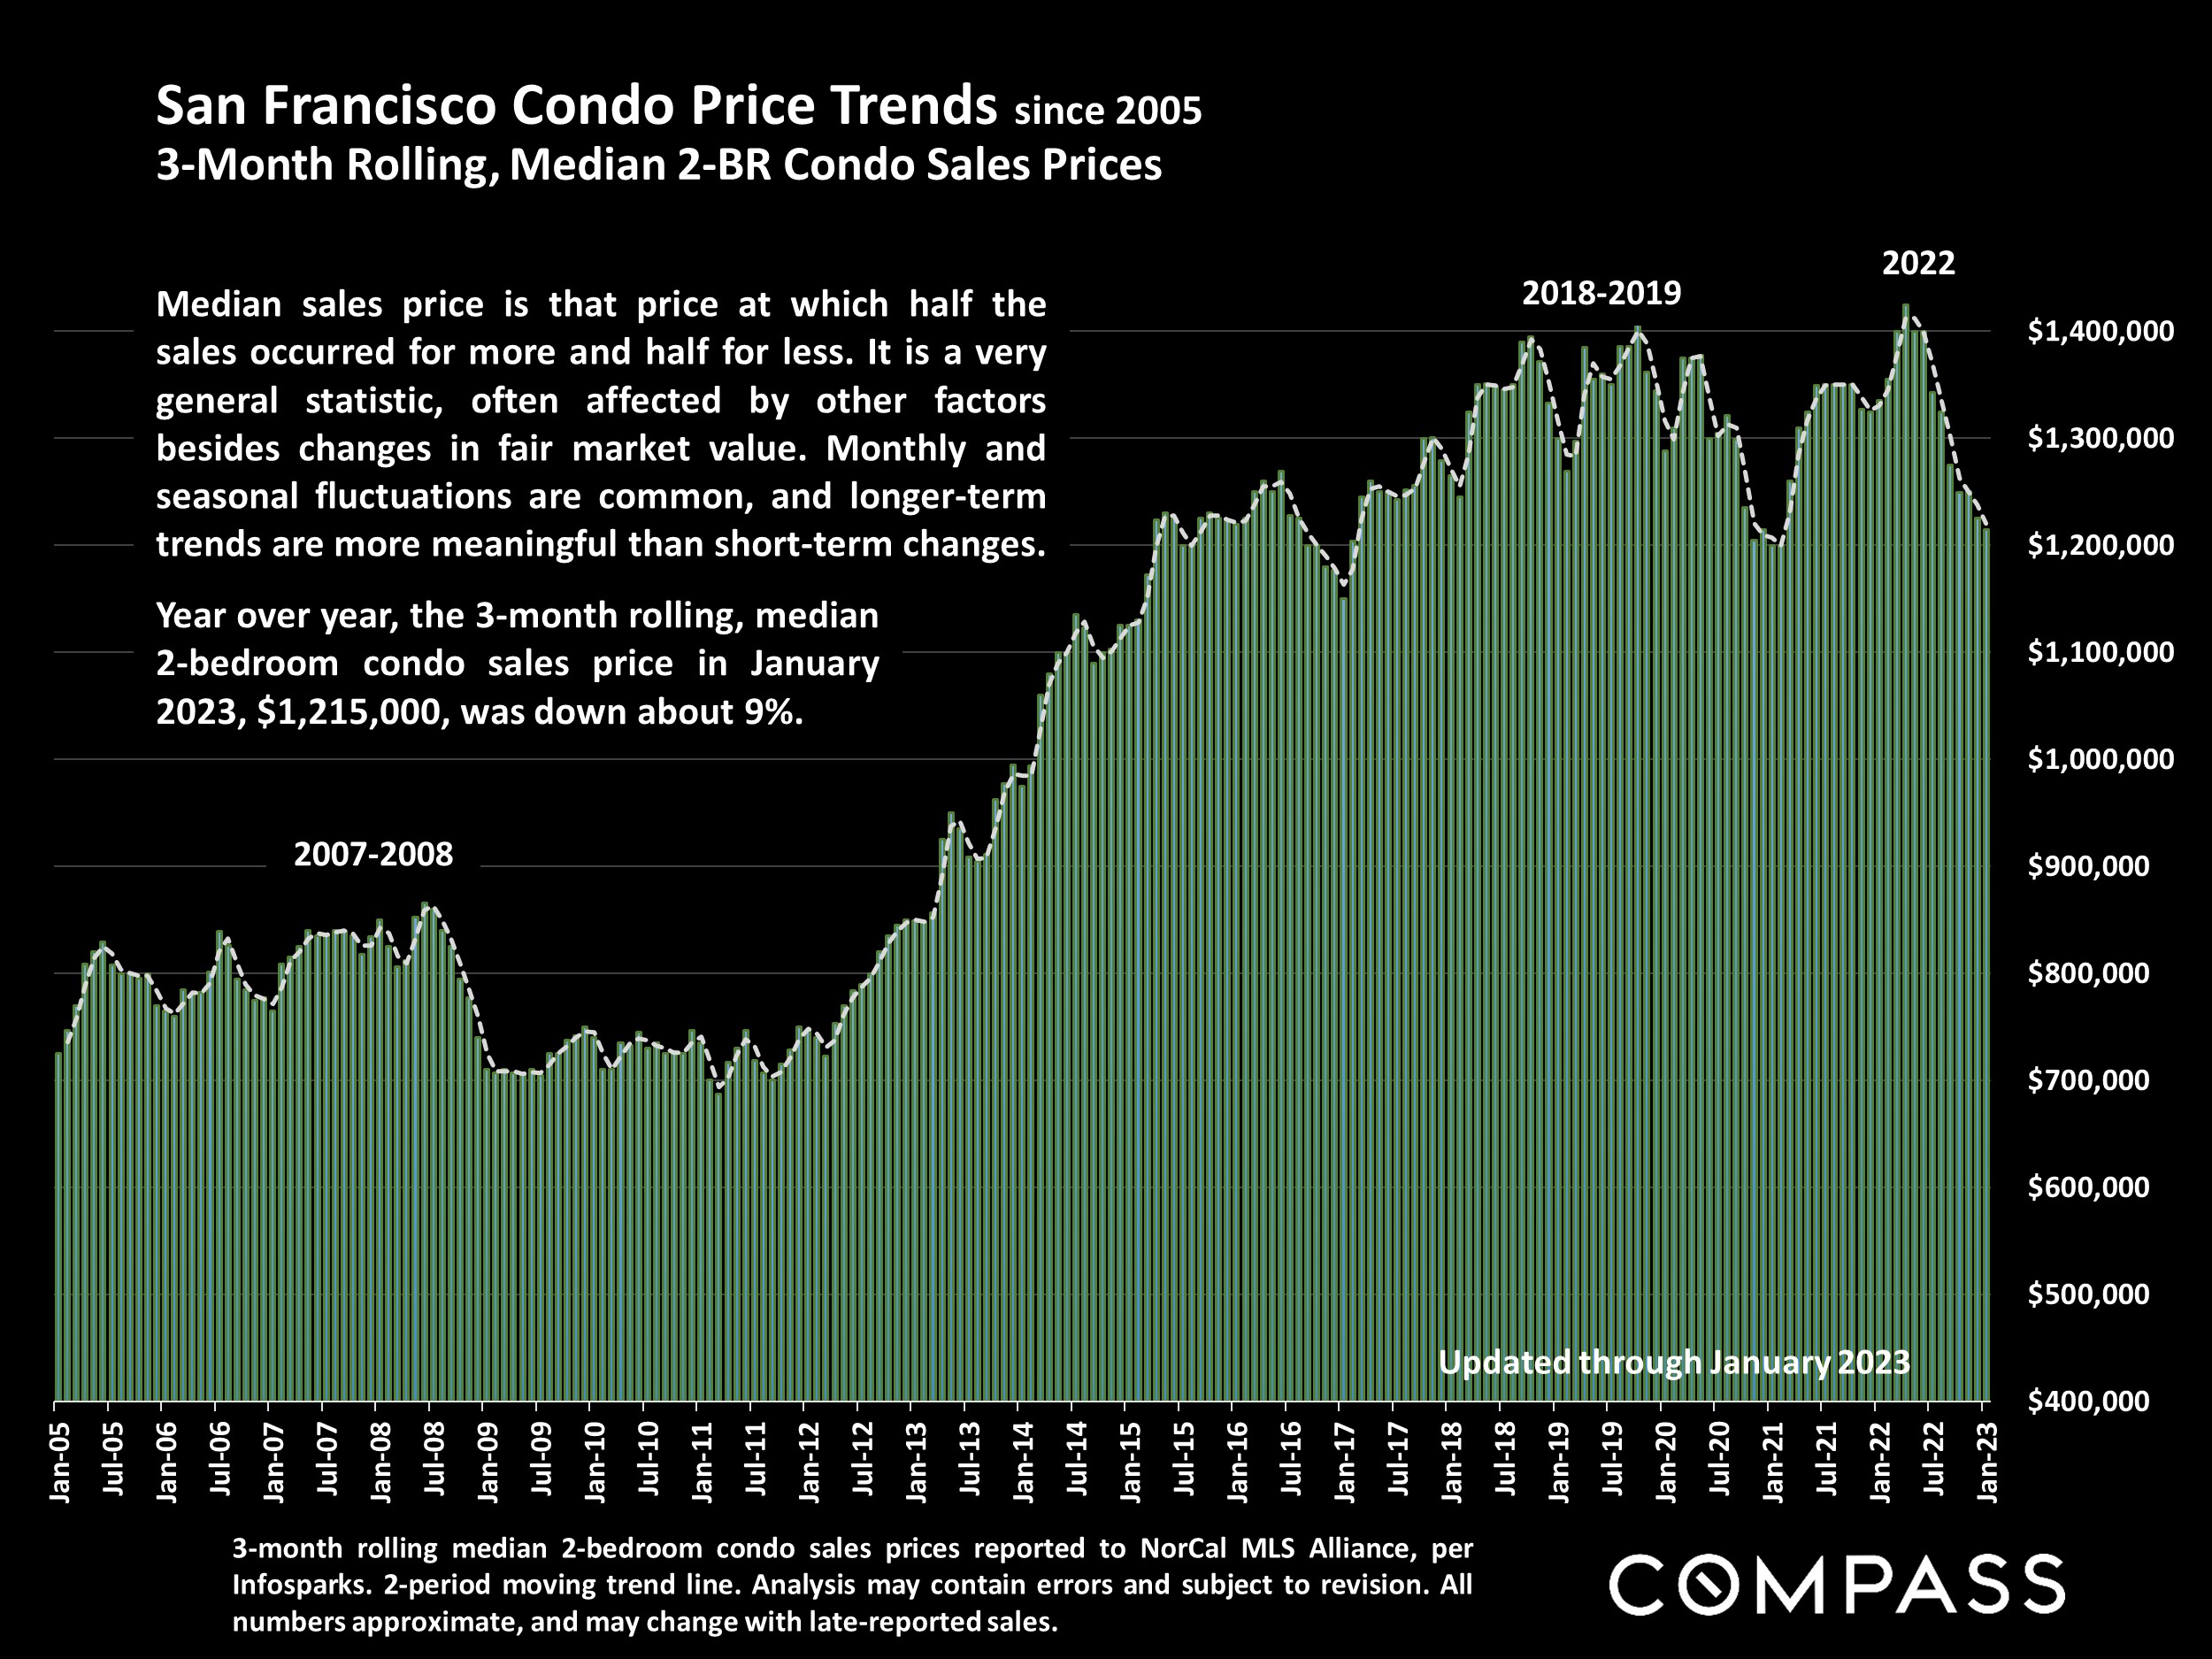 San Francisco Condo Prices from 2005